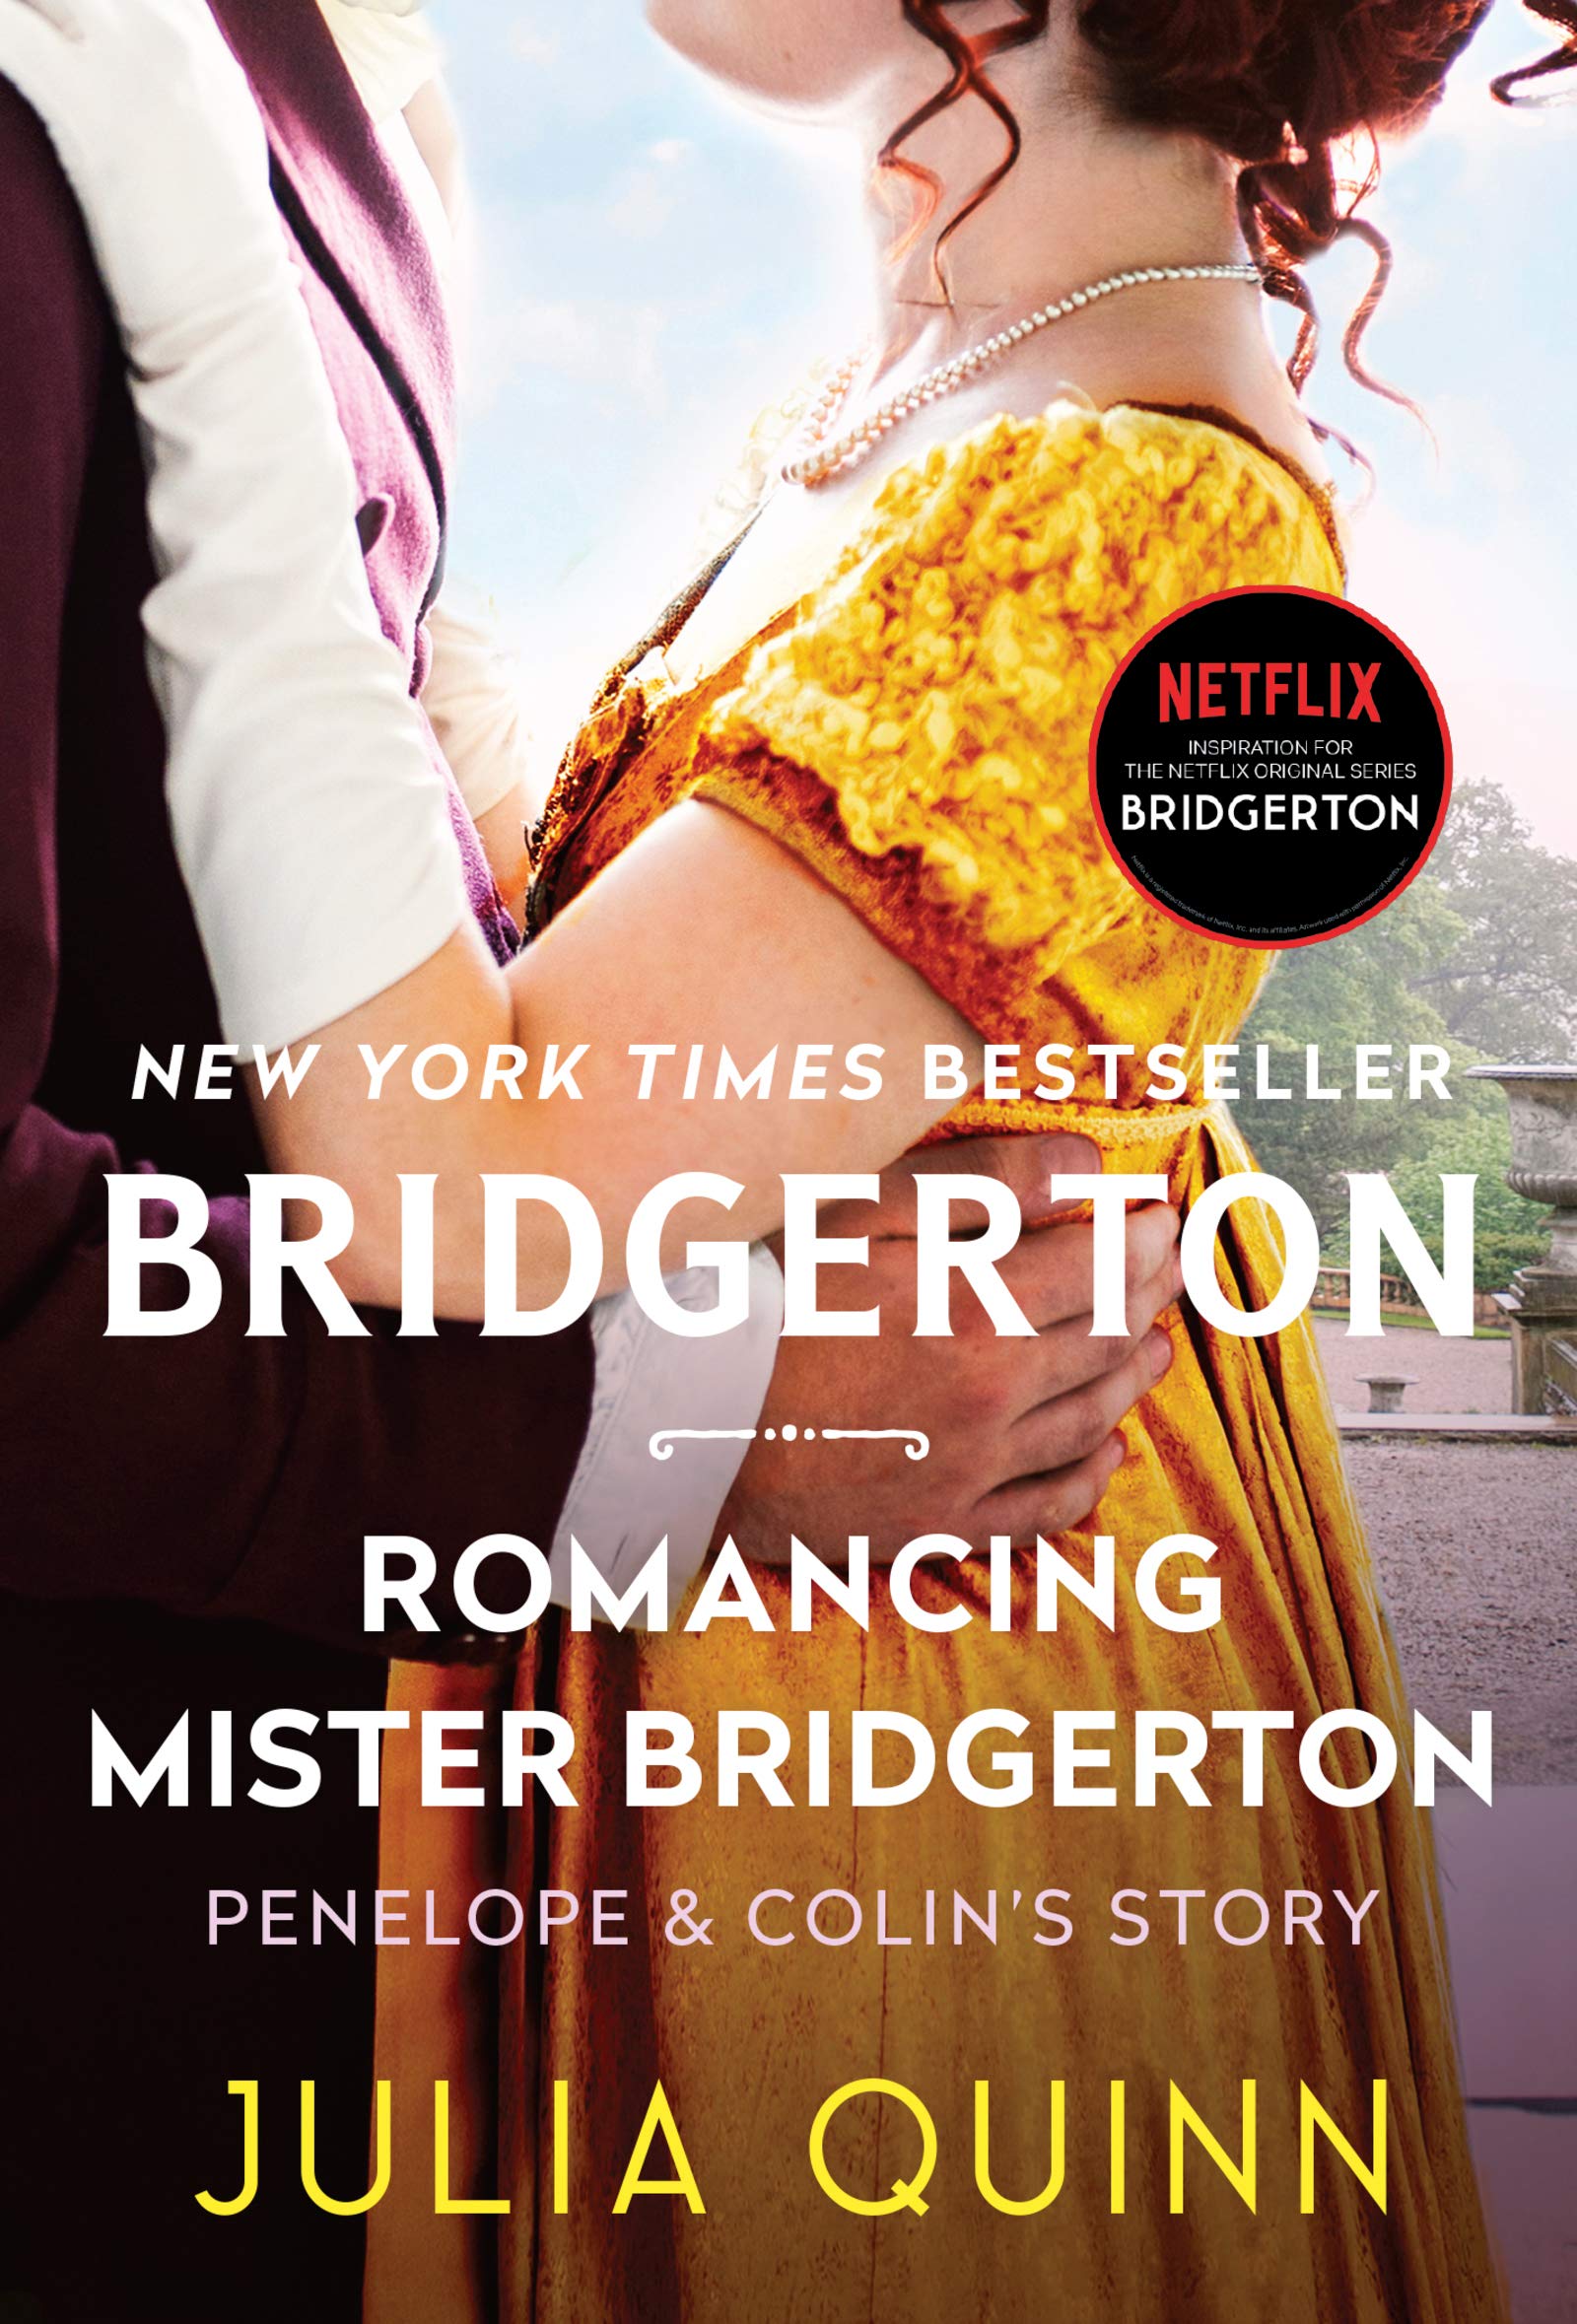 Romancing Mister Bridgerton Audiobook